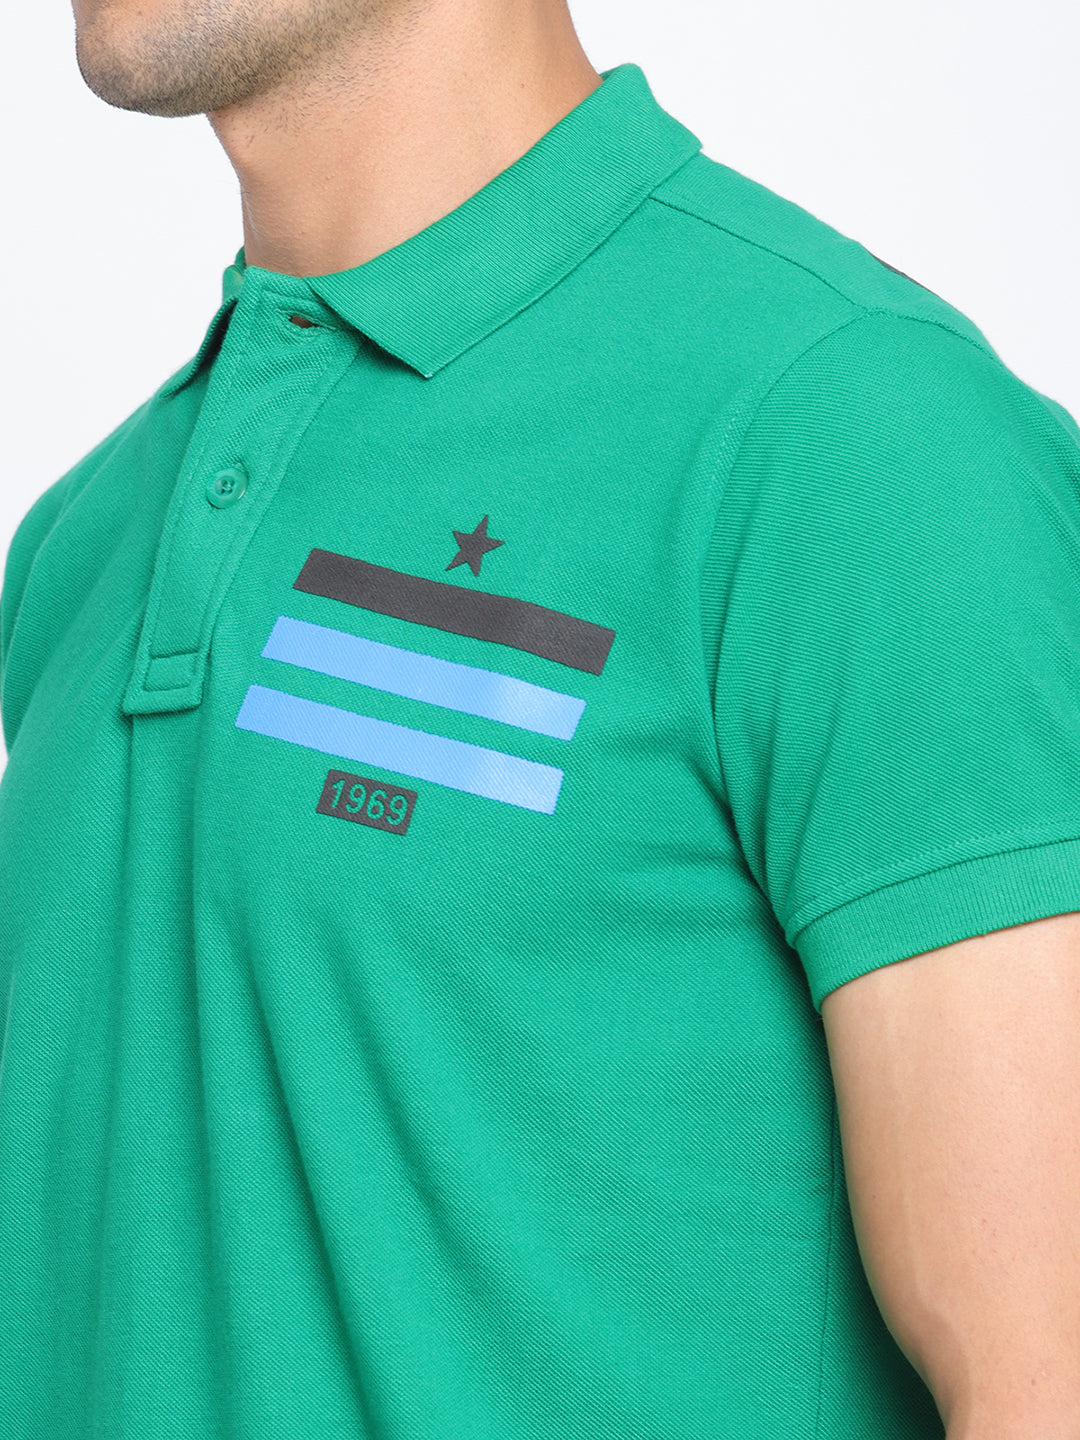 Punk Polo Green T-Shirt